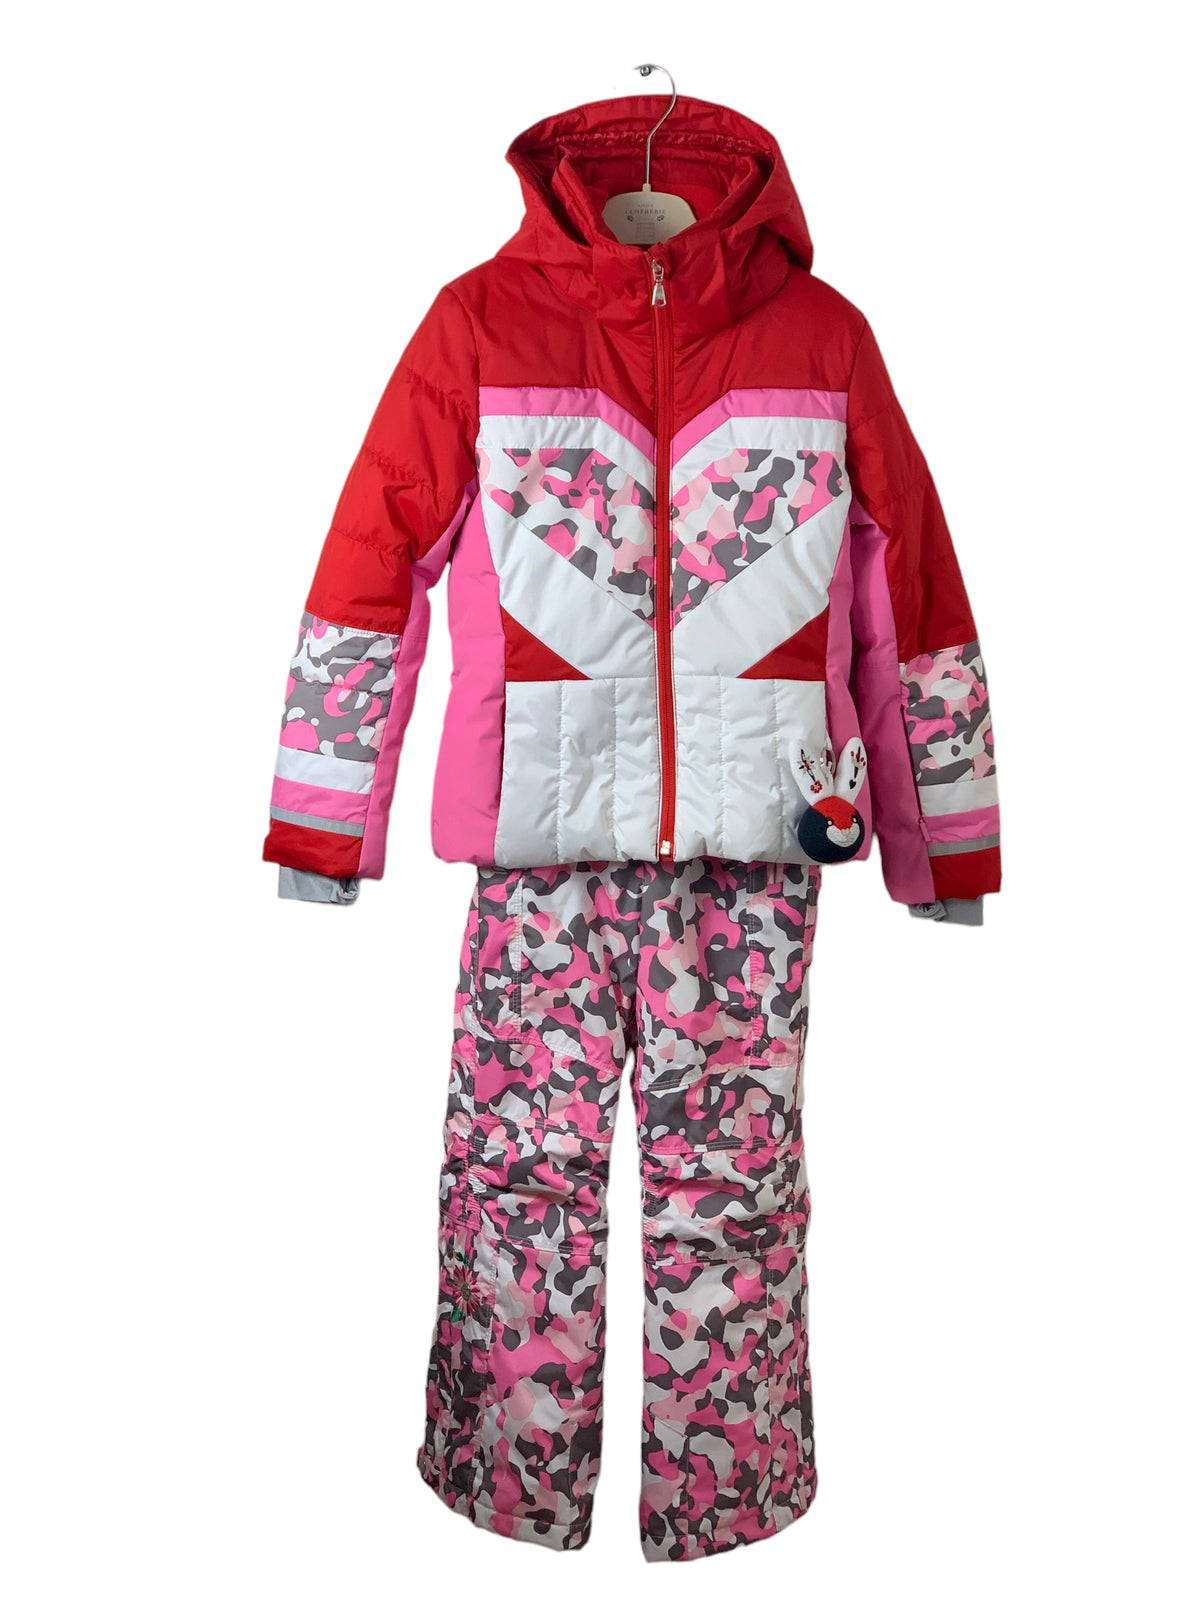 Veste ski FILLE Spyder 10 ans - Little.Clotherie.Family